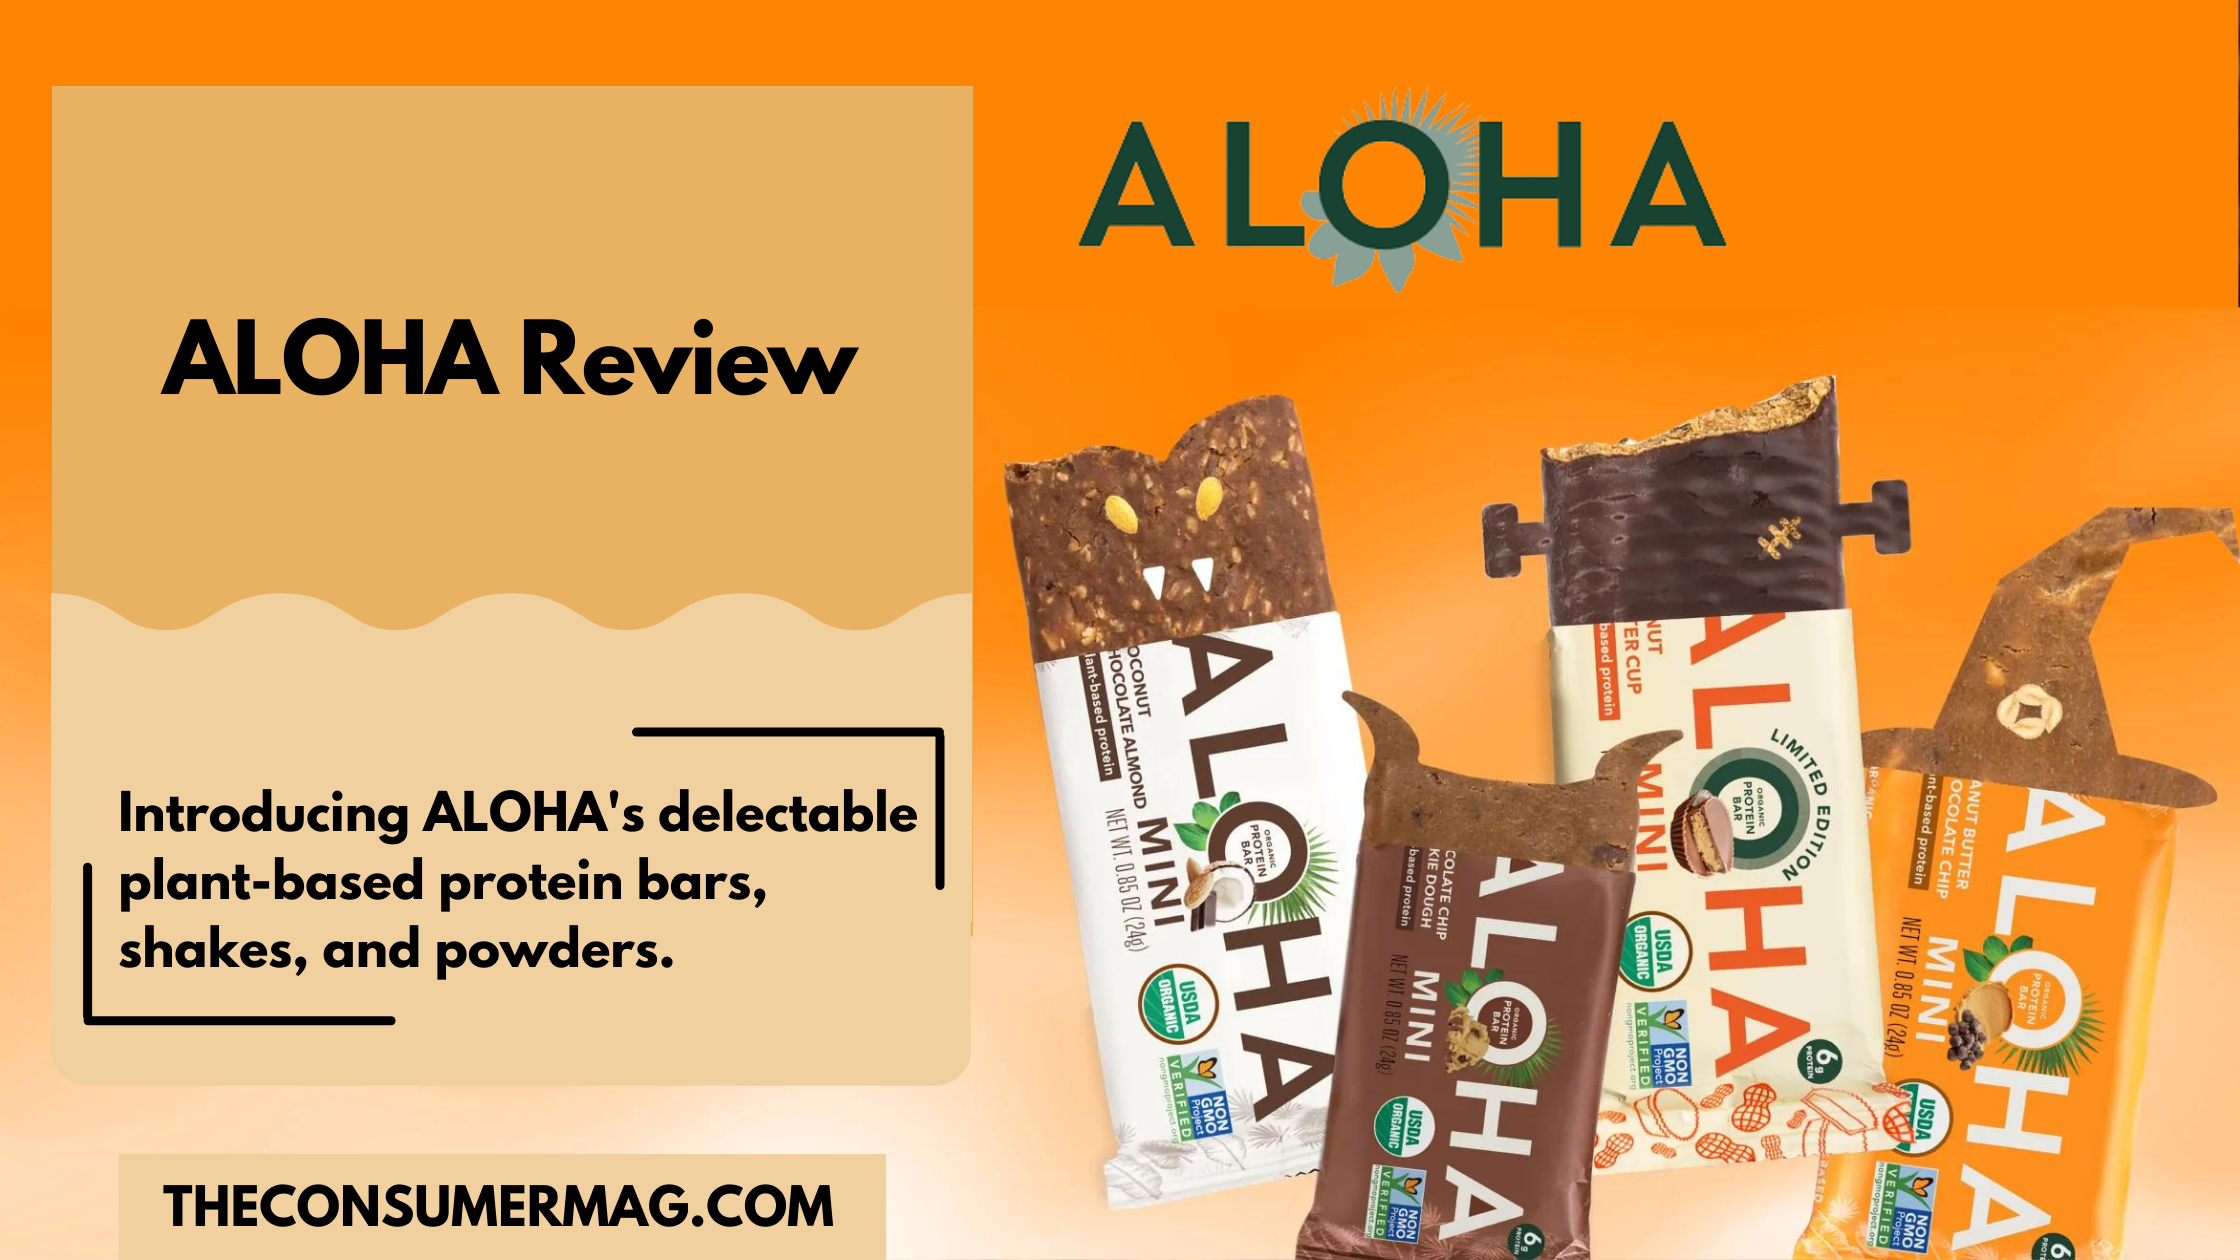 Aloha featured image